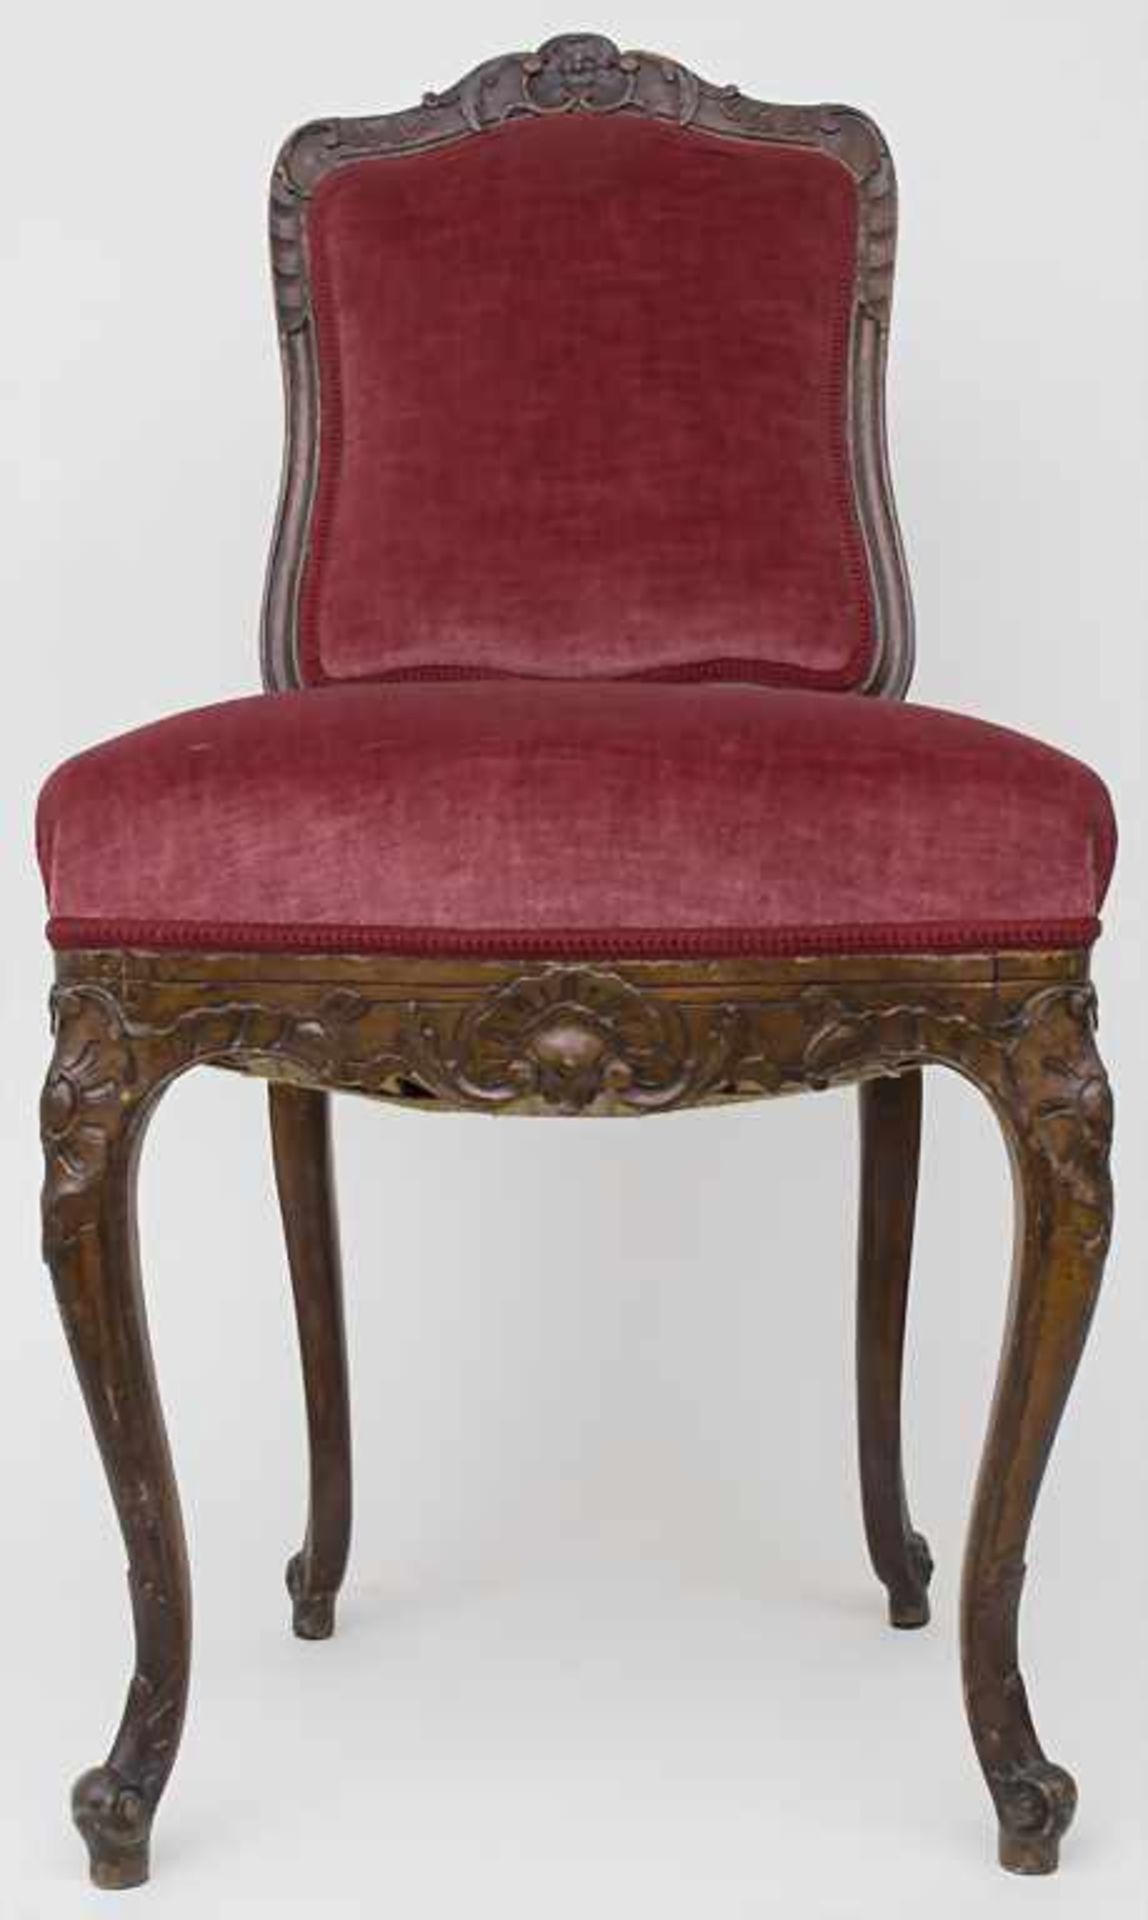 Rokoko--Stuhl mit Rocaillendekor / A Rococo chair with rocaillesMaterial: Holz, geschnitzt, dunkel